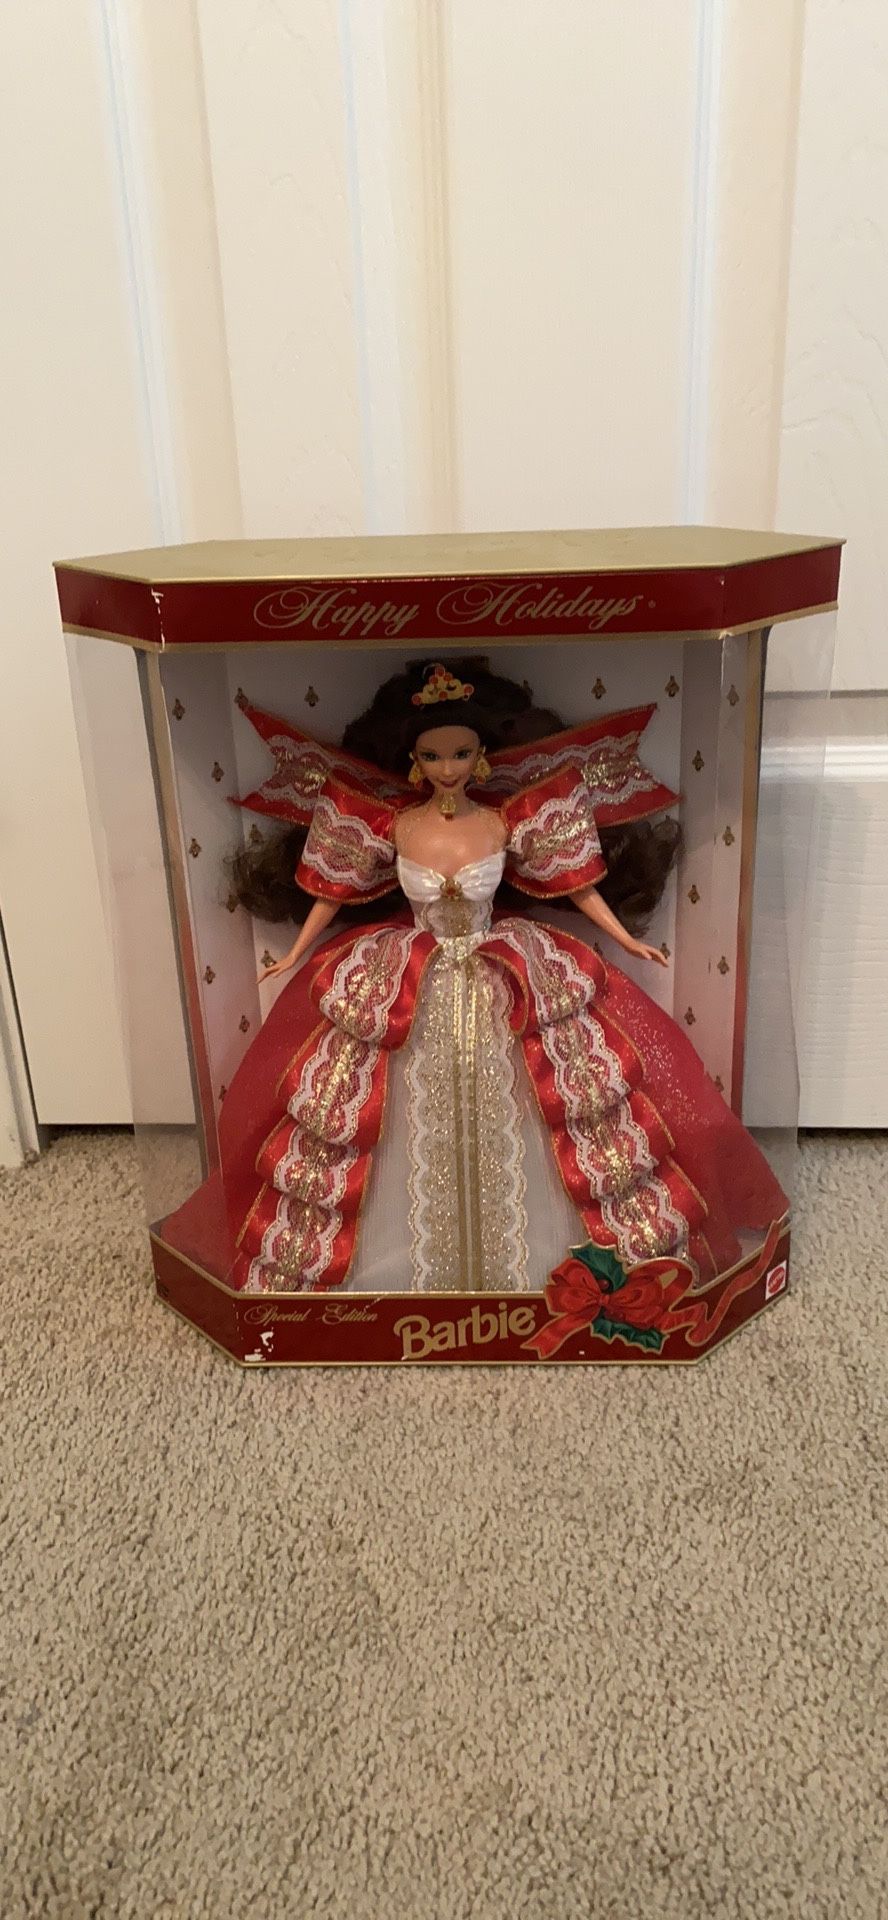 1997 Happy Holidays Barbie Doll